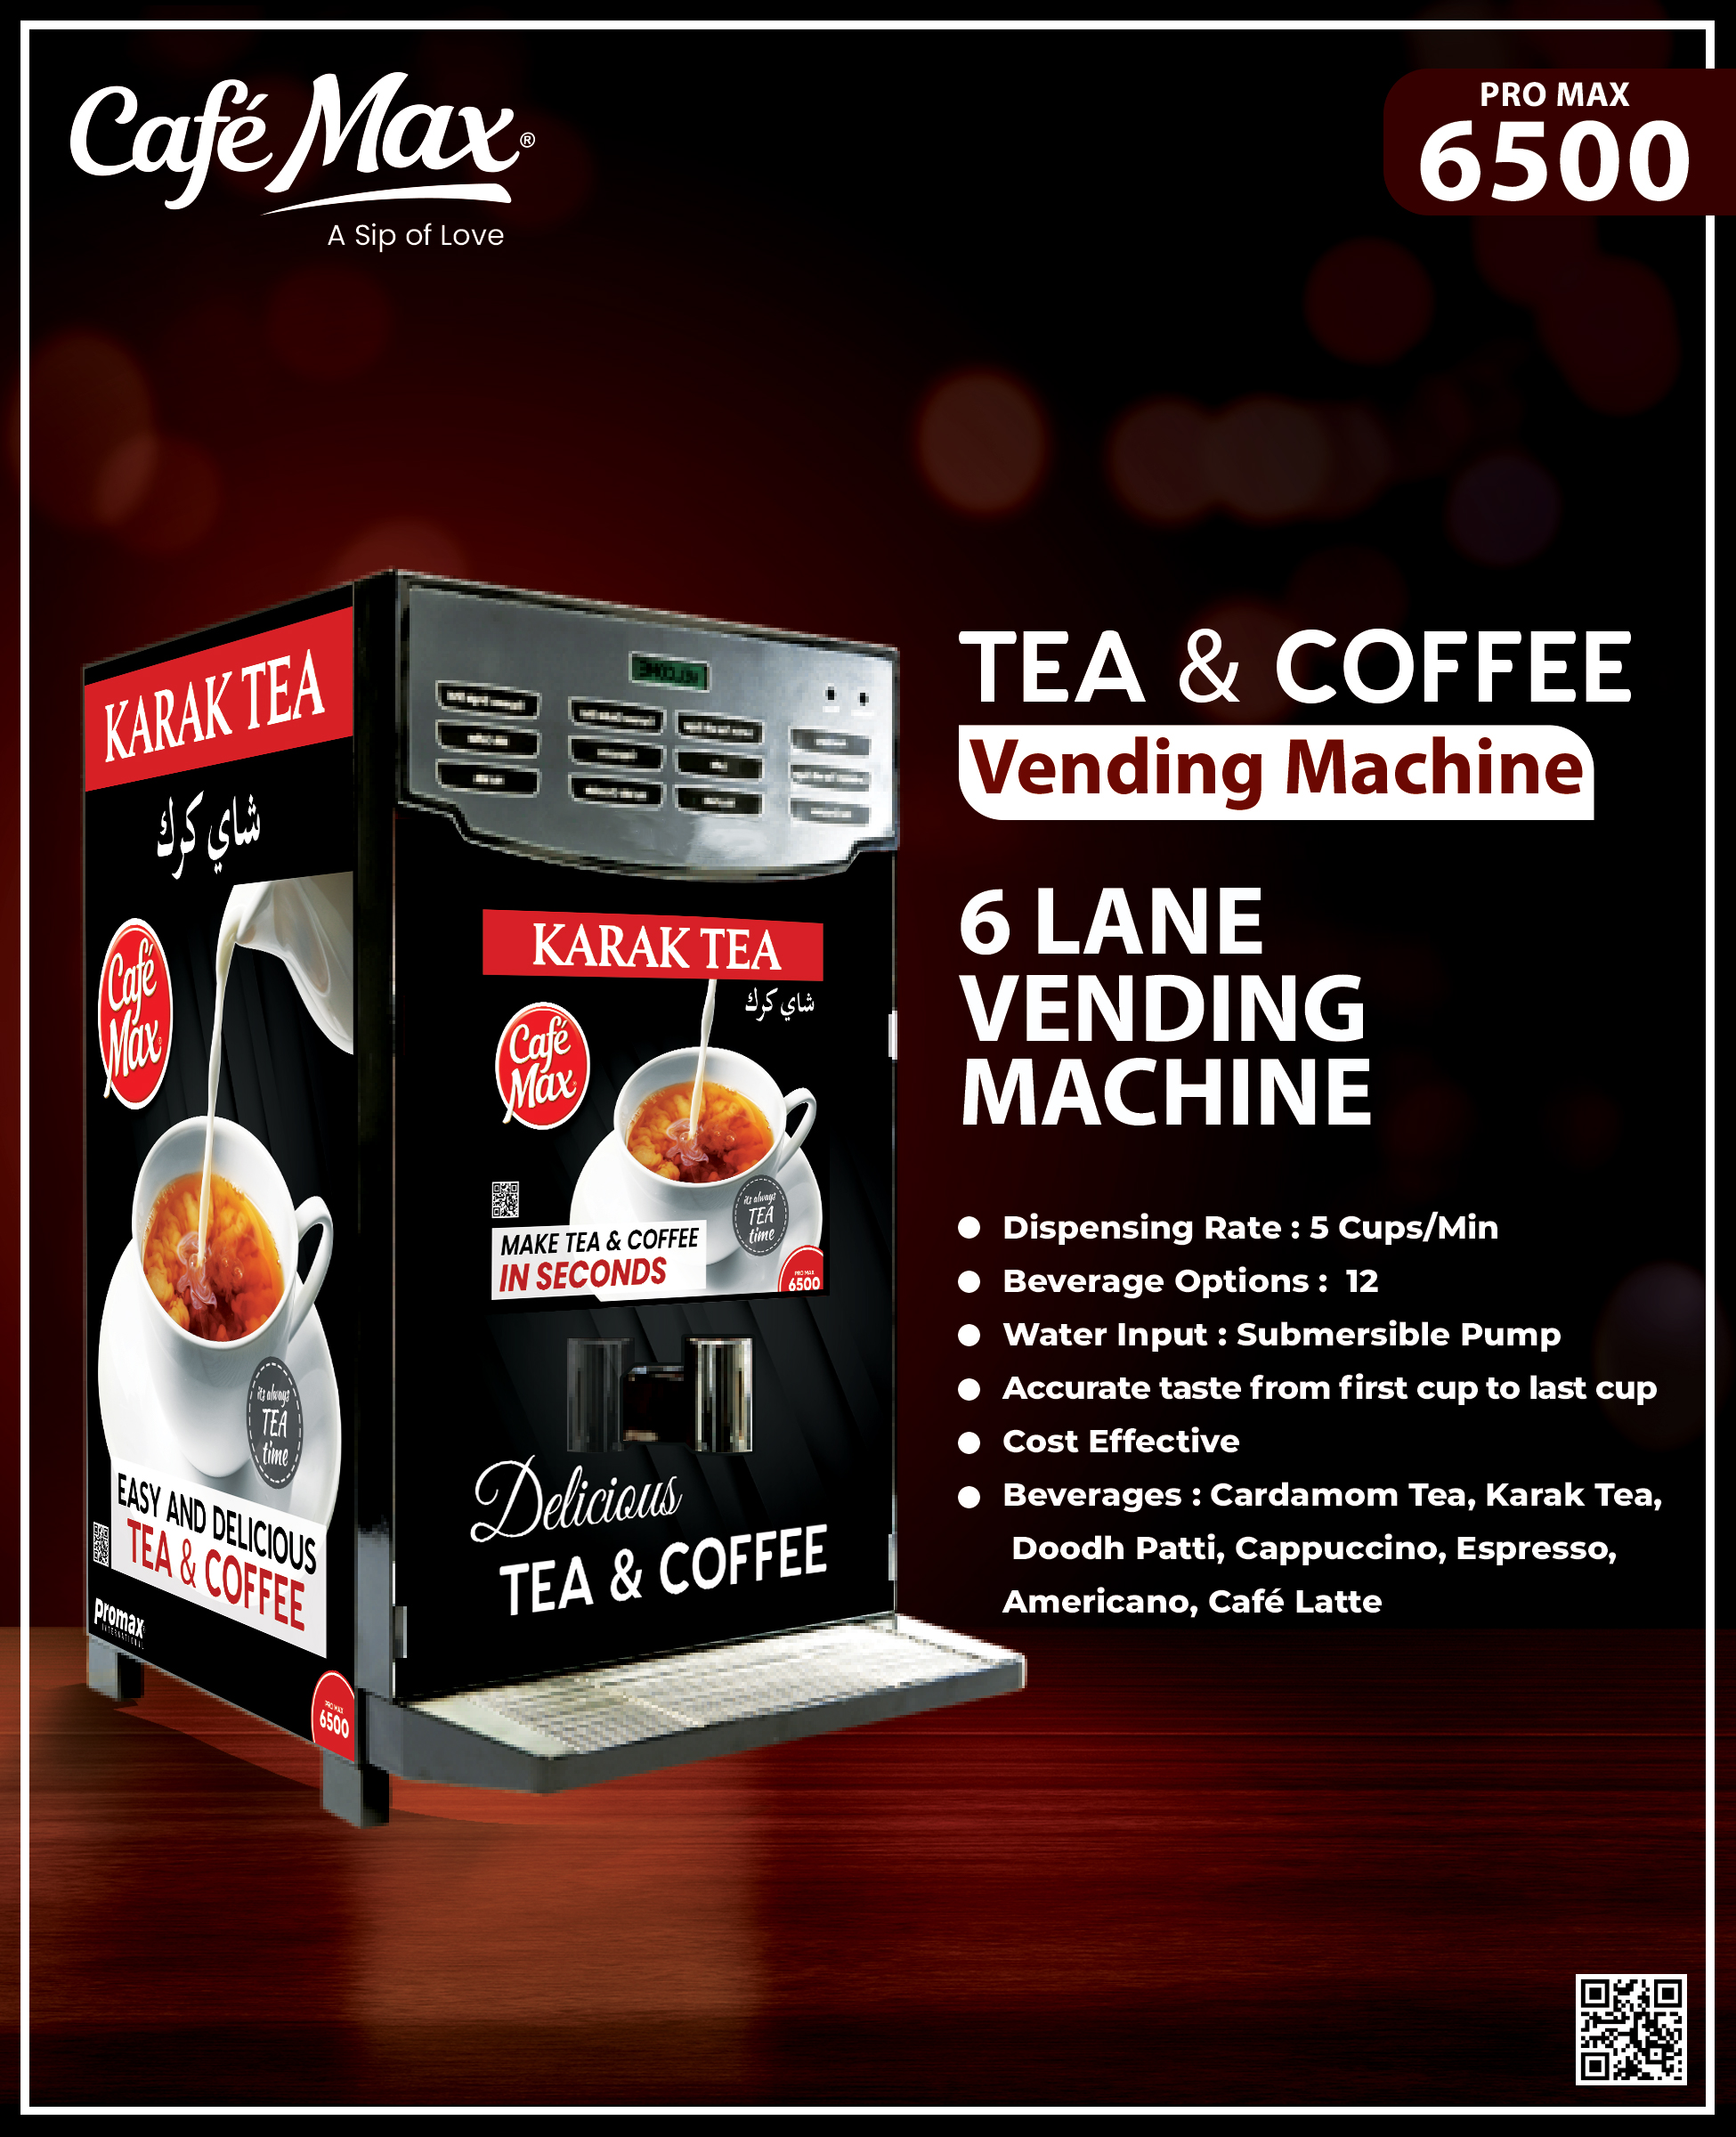 Promax 6500 vending machine Cafemax